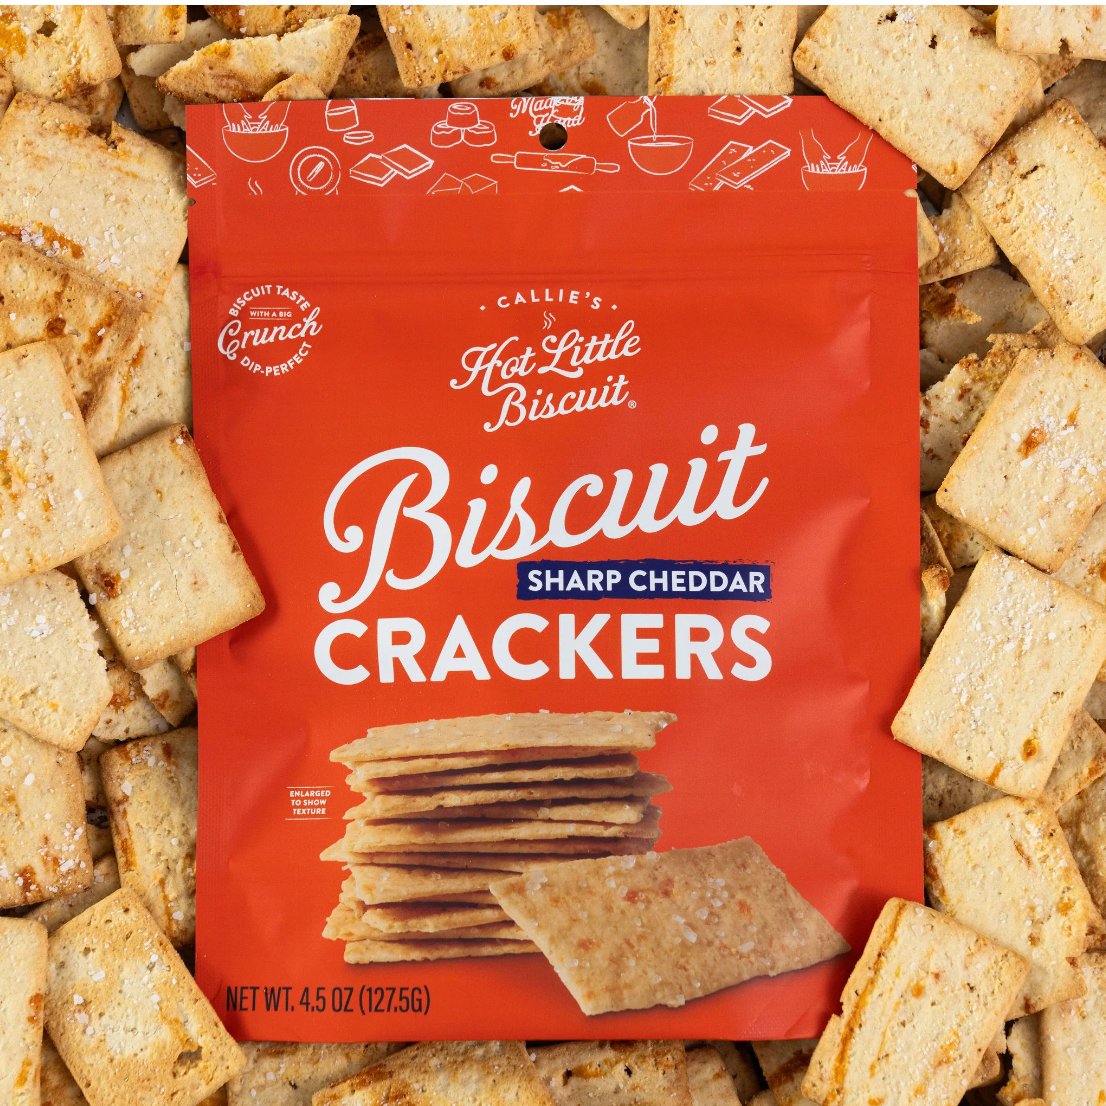 Callie's Hot Little Biscuit Sharp Cheddar Biscuit Crackers - Essentially Charleston